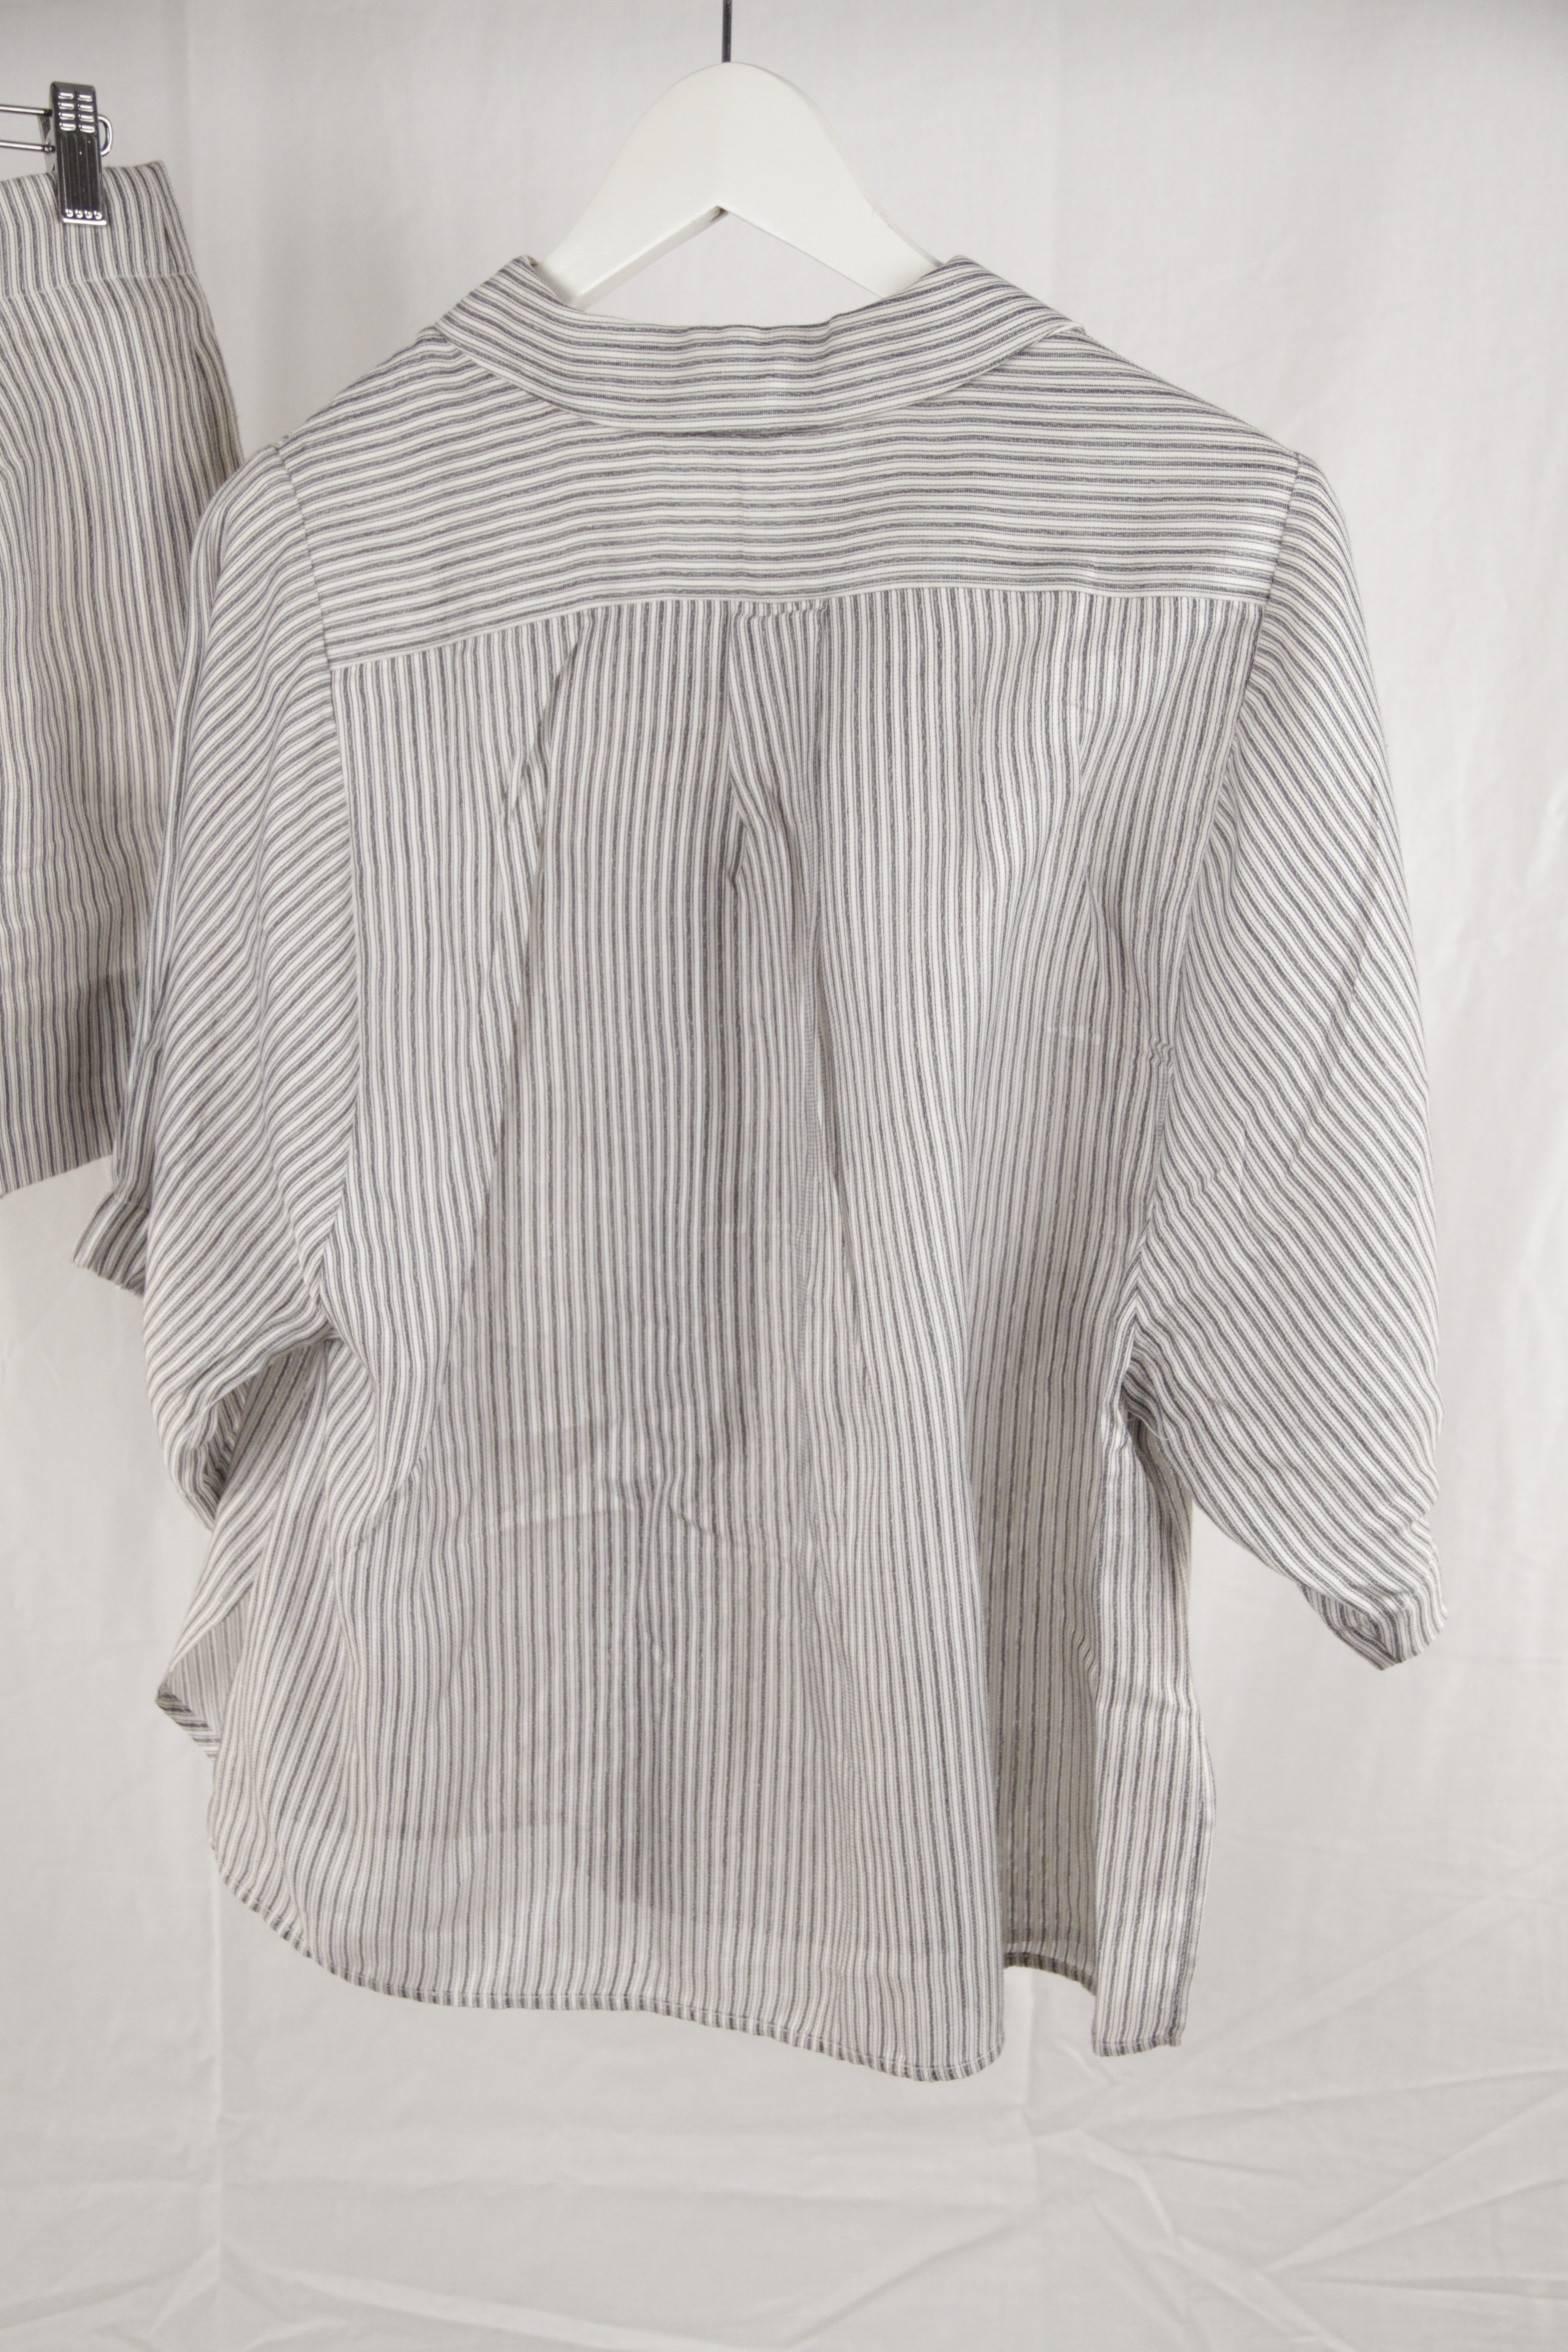 Gray STELLA McCARTNEY Striped Cotton & Silk SHIRT & SHORT Pants SET Size 38